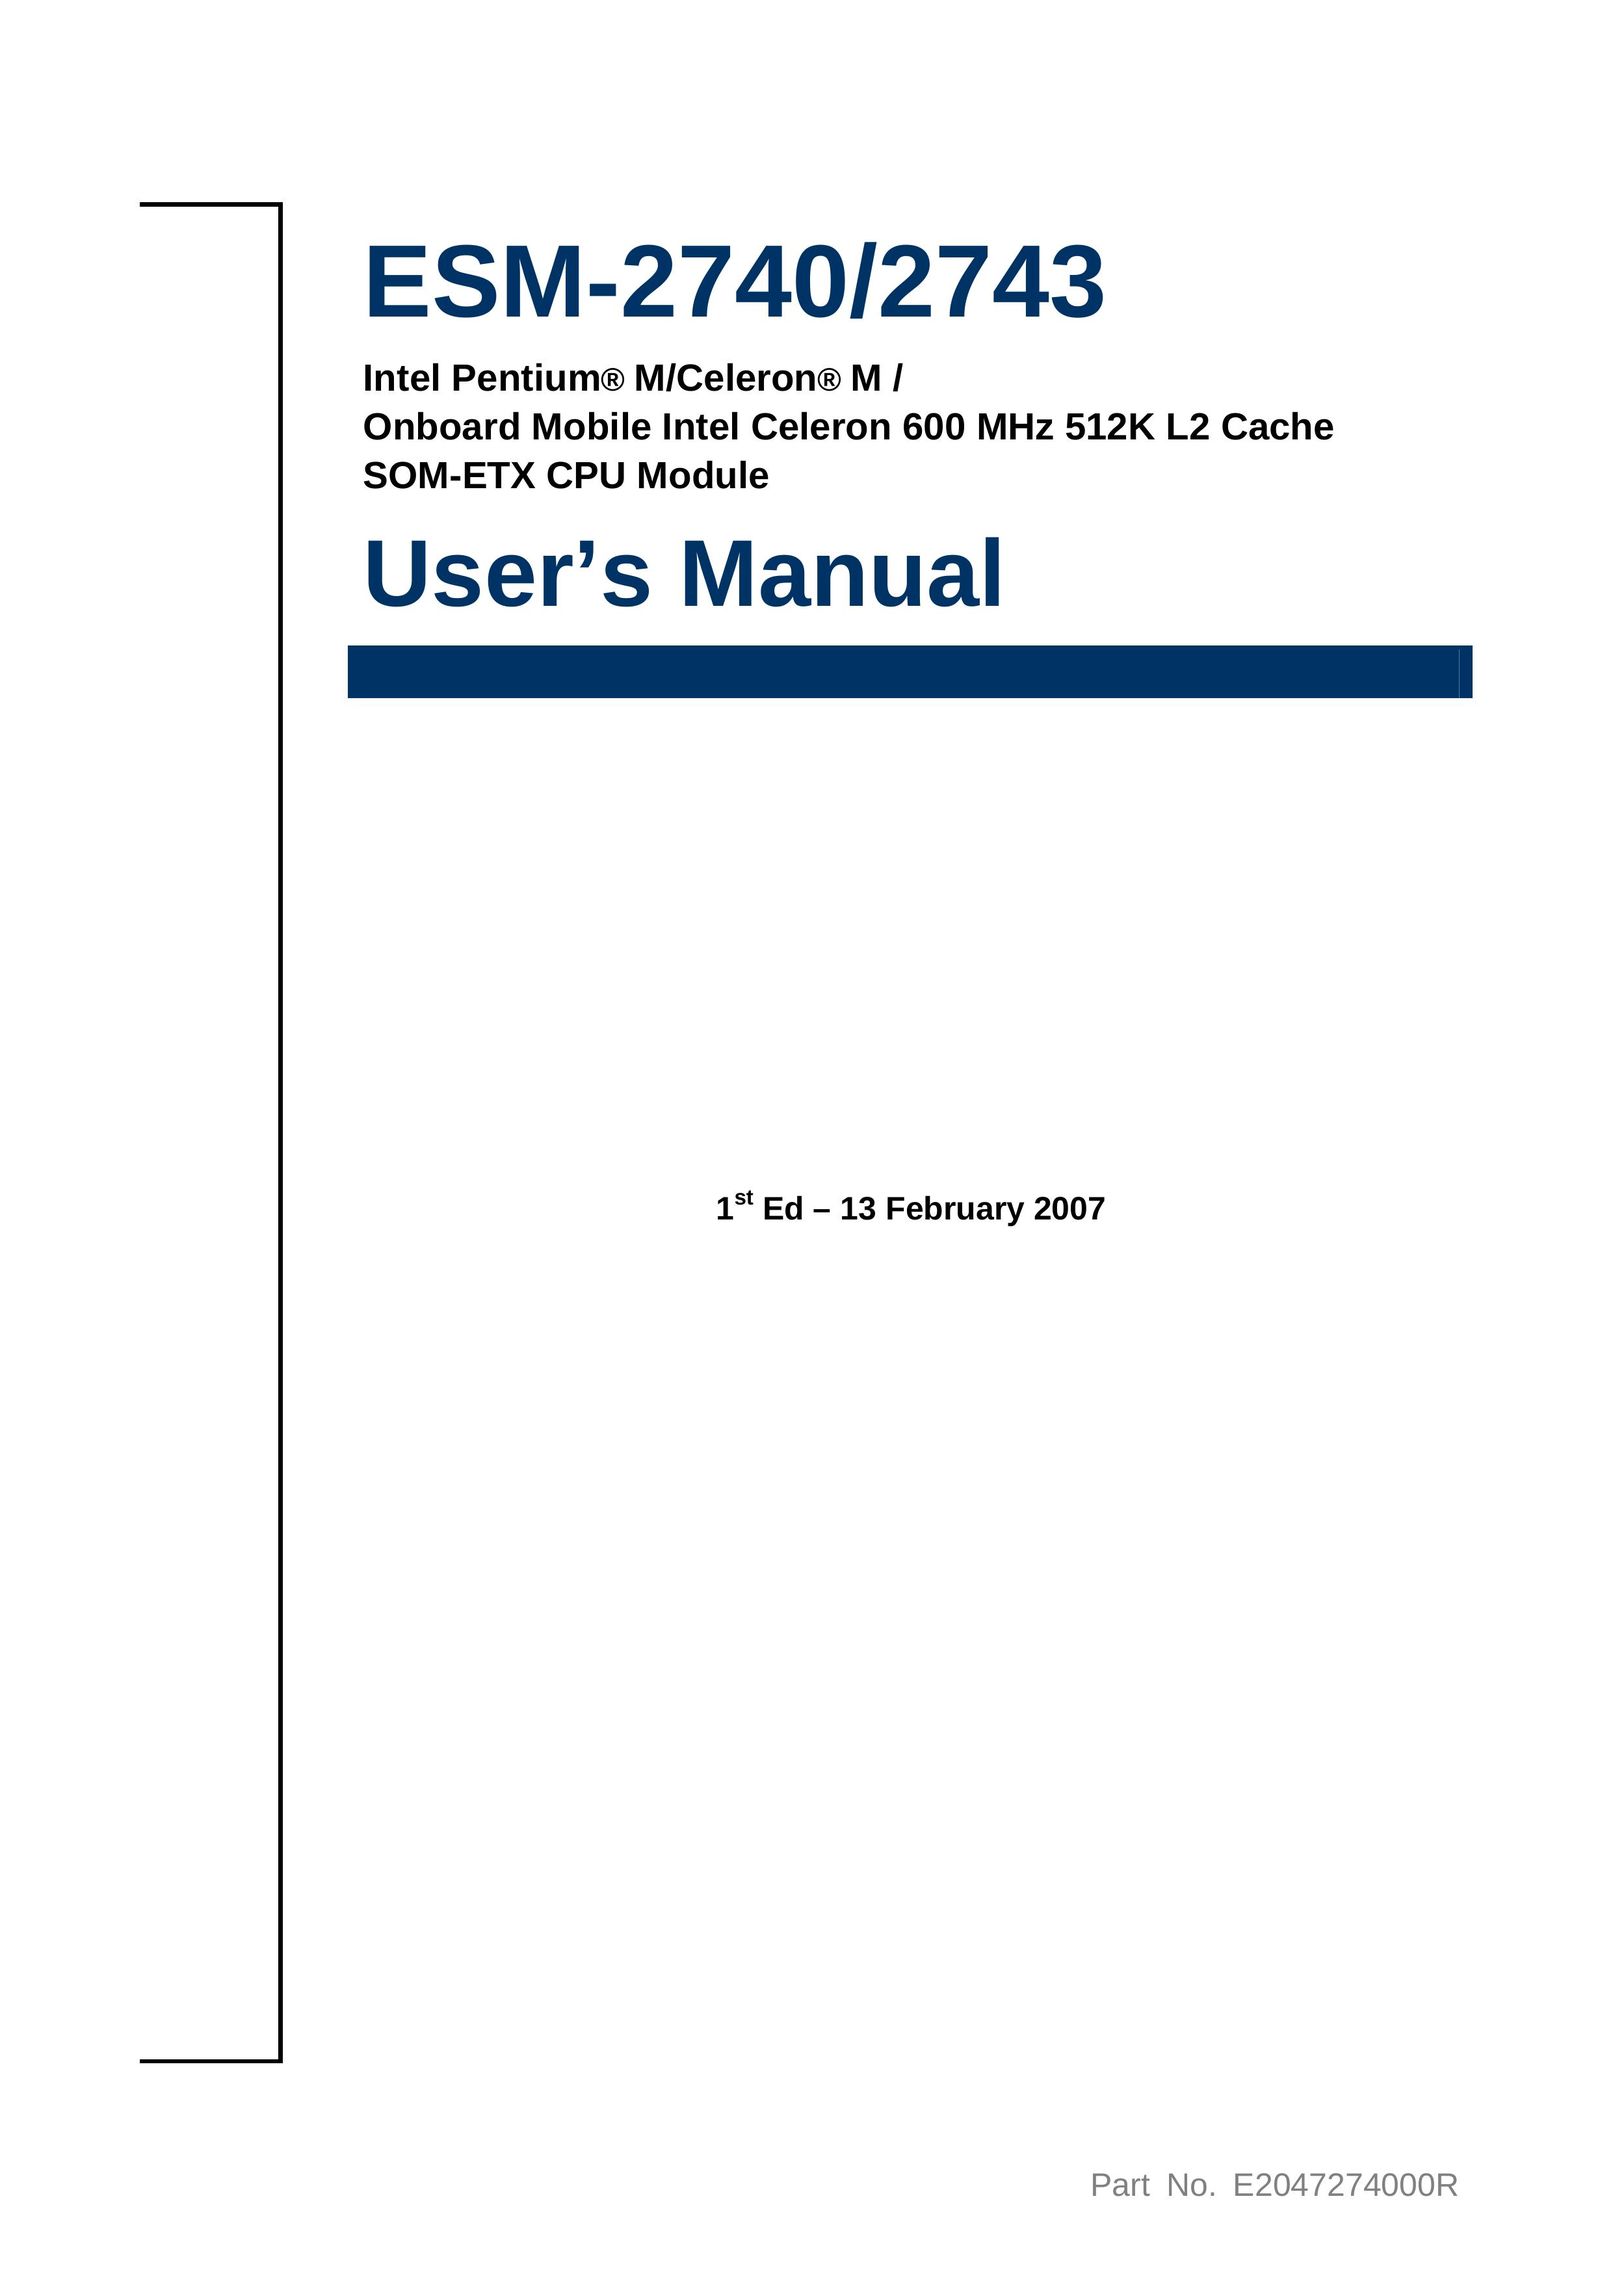 Intel ESM-2743 Personal Computer User Manual